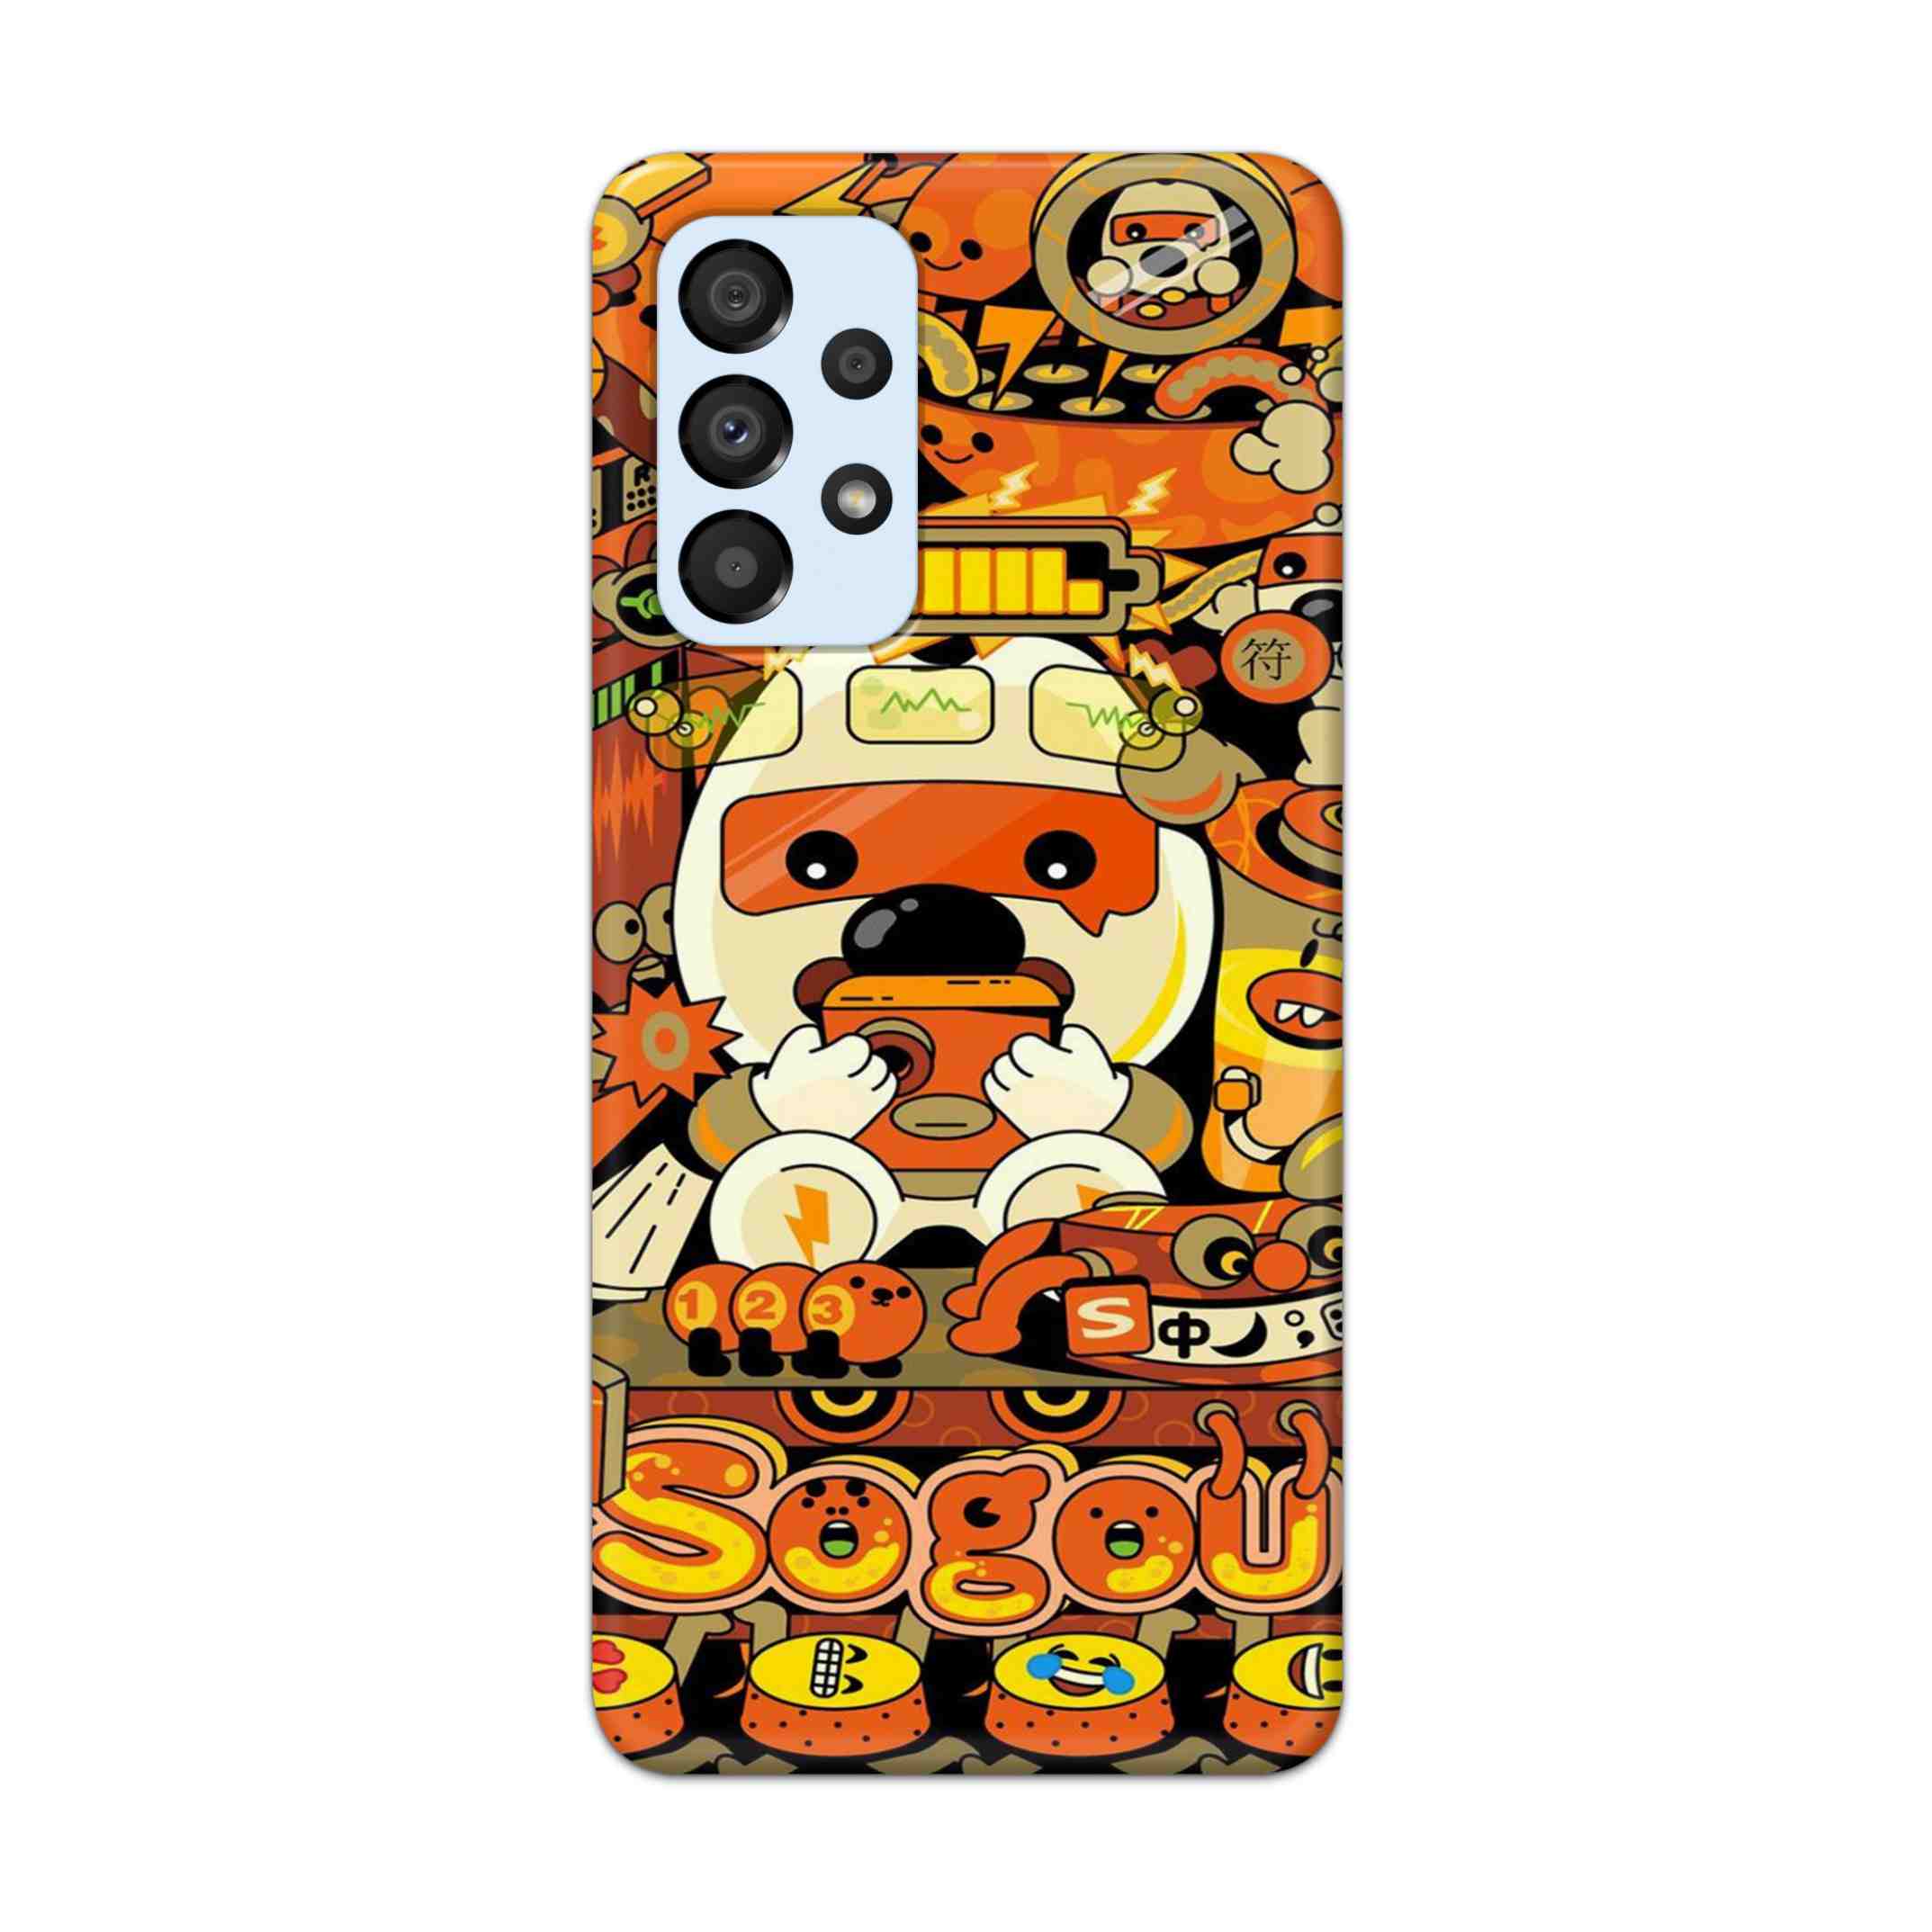 Buy Sogou Hard Back Mobile Phone Case Cover For Samsung A33 5G Online